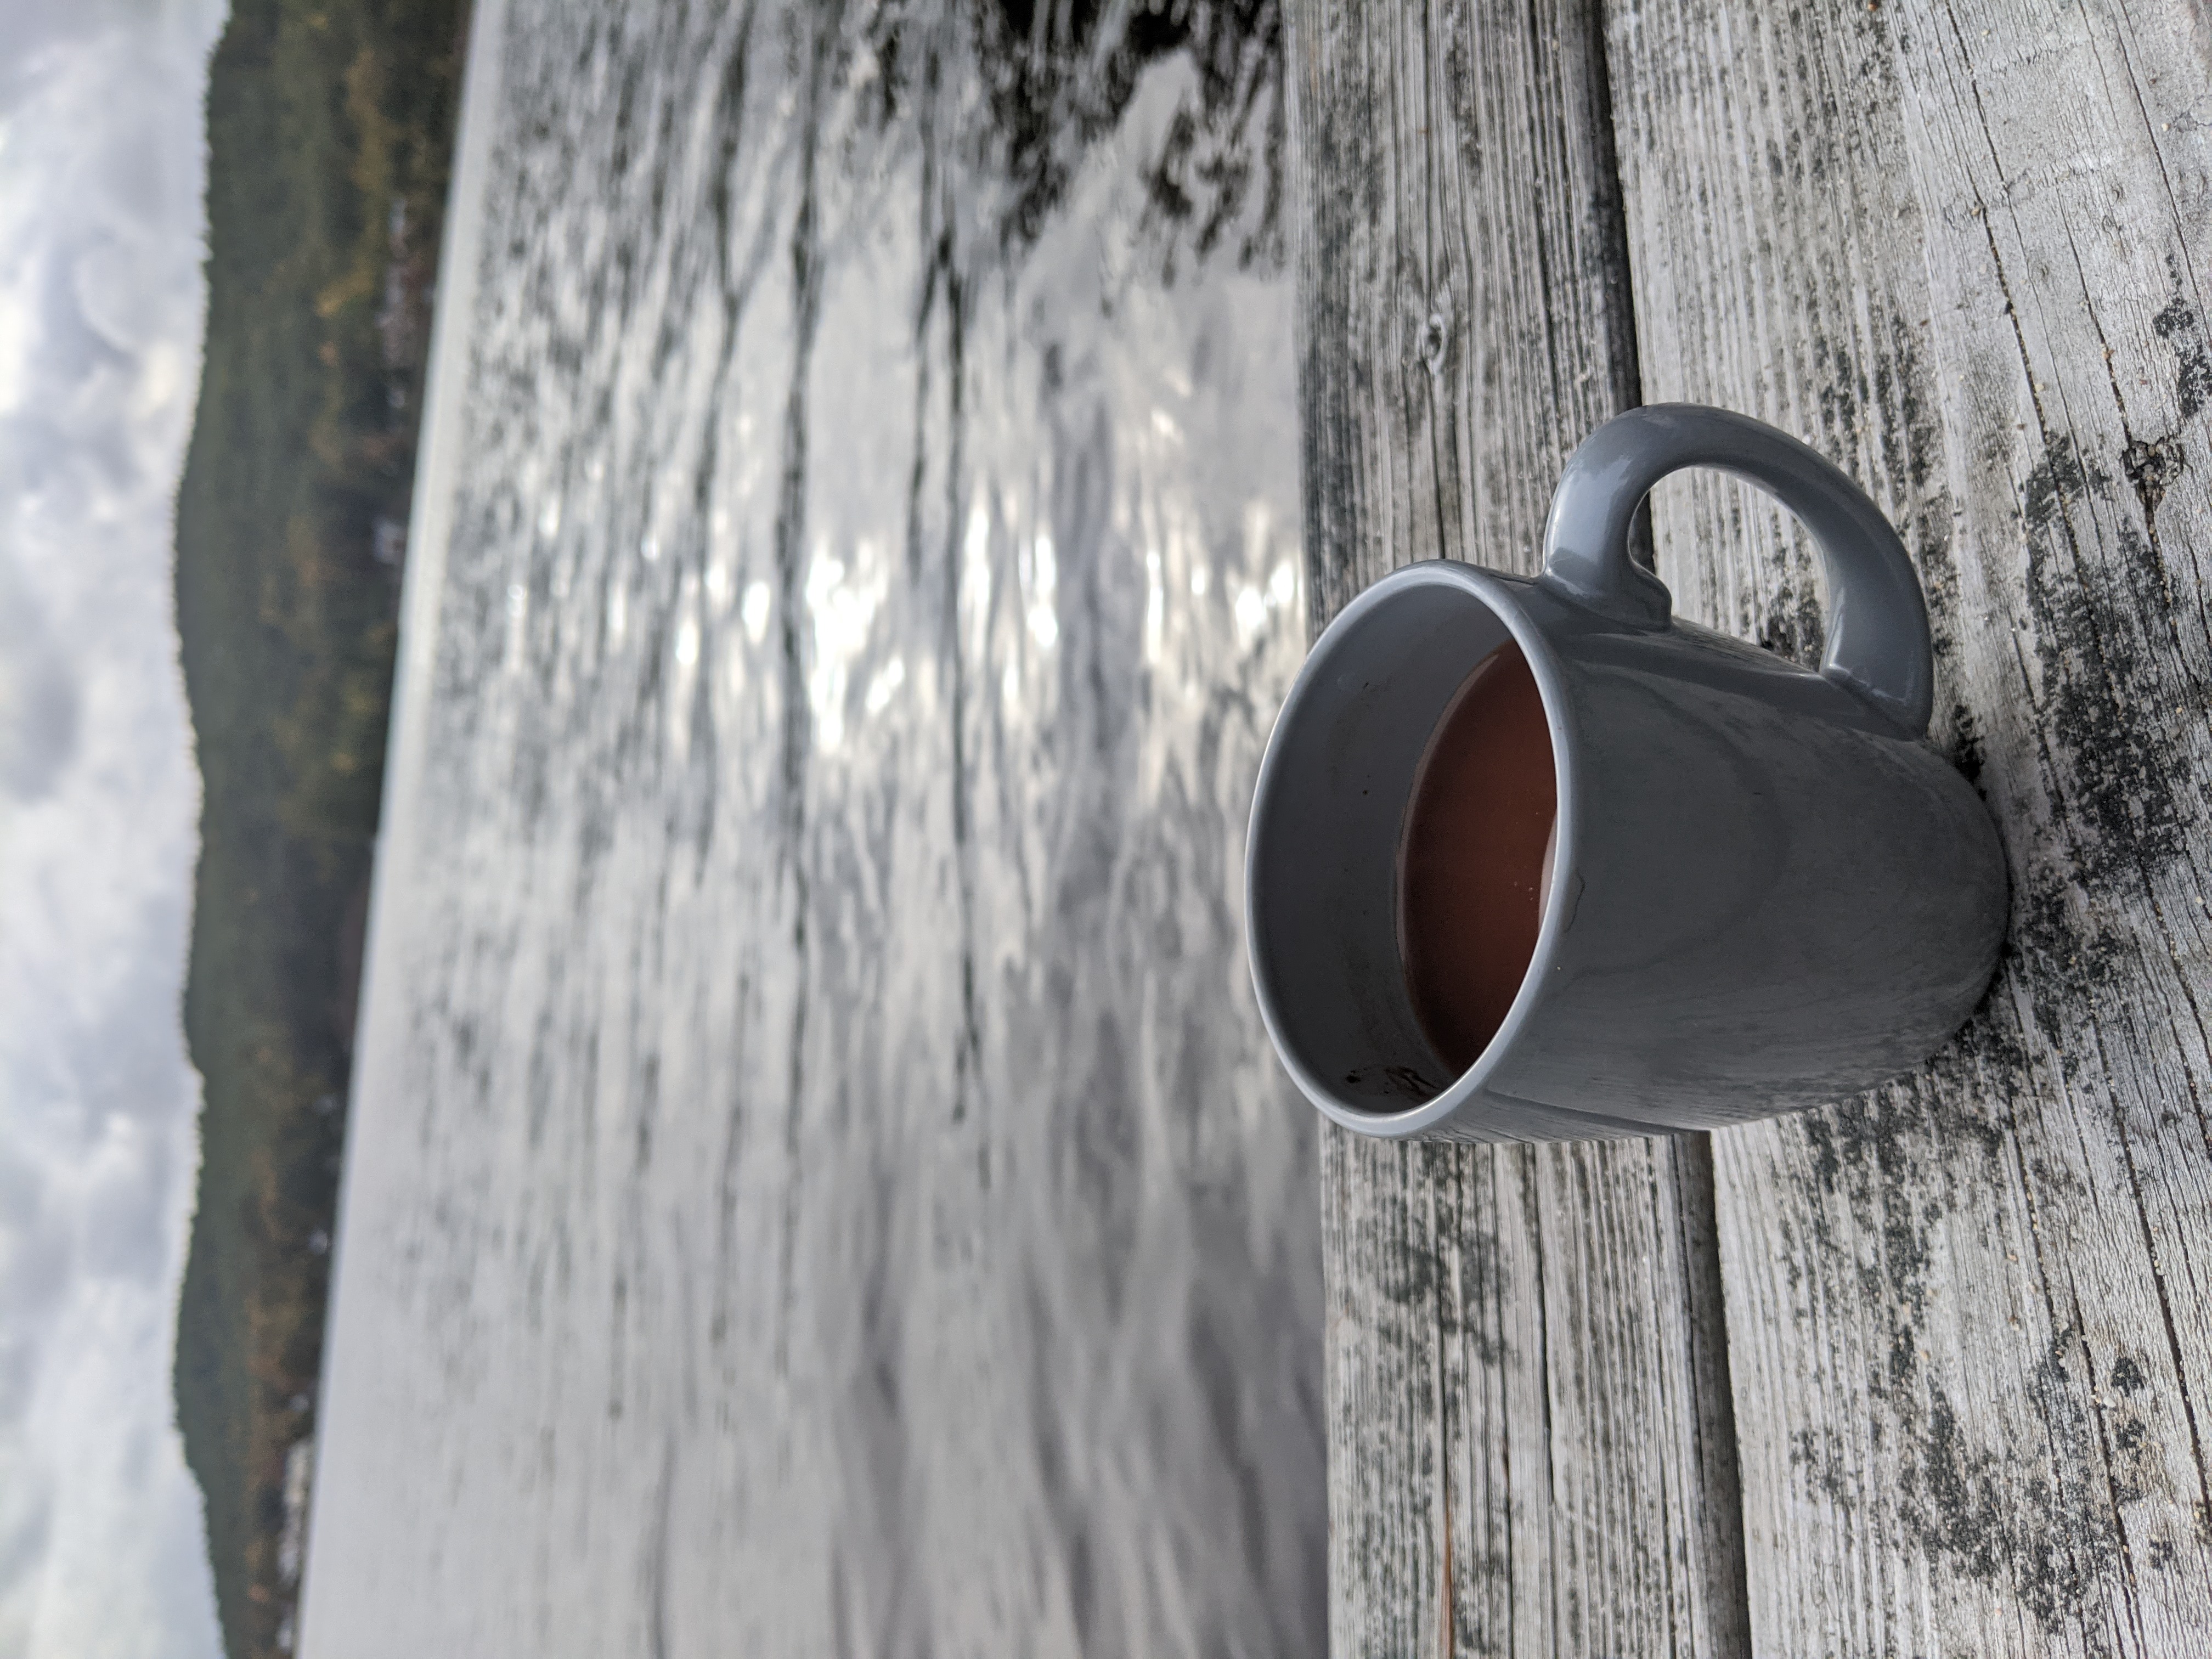 Vocoa Hot Cocoa on a dock at a lake